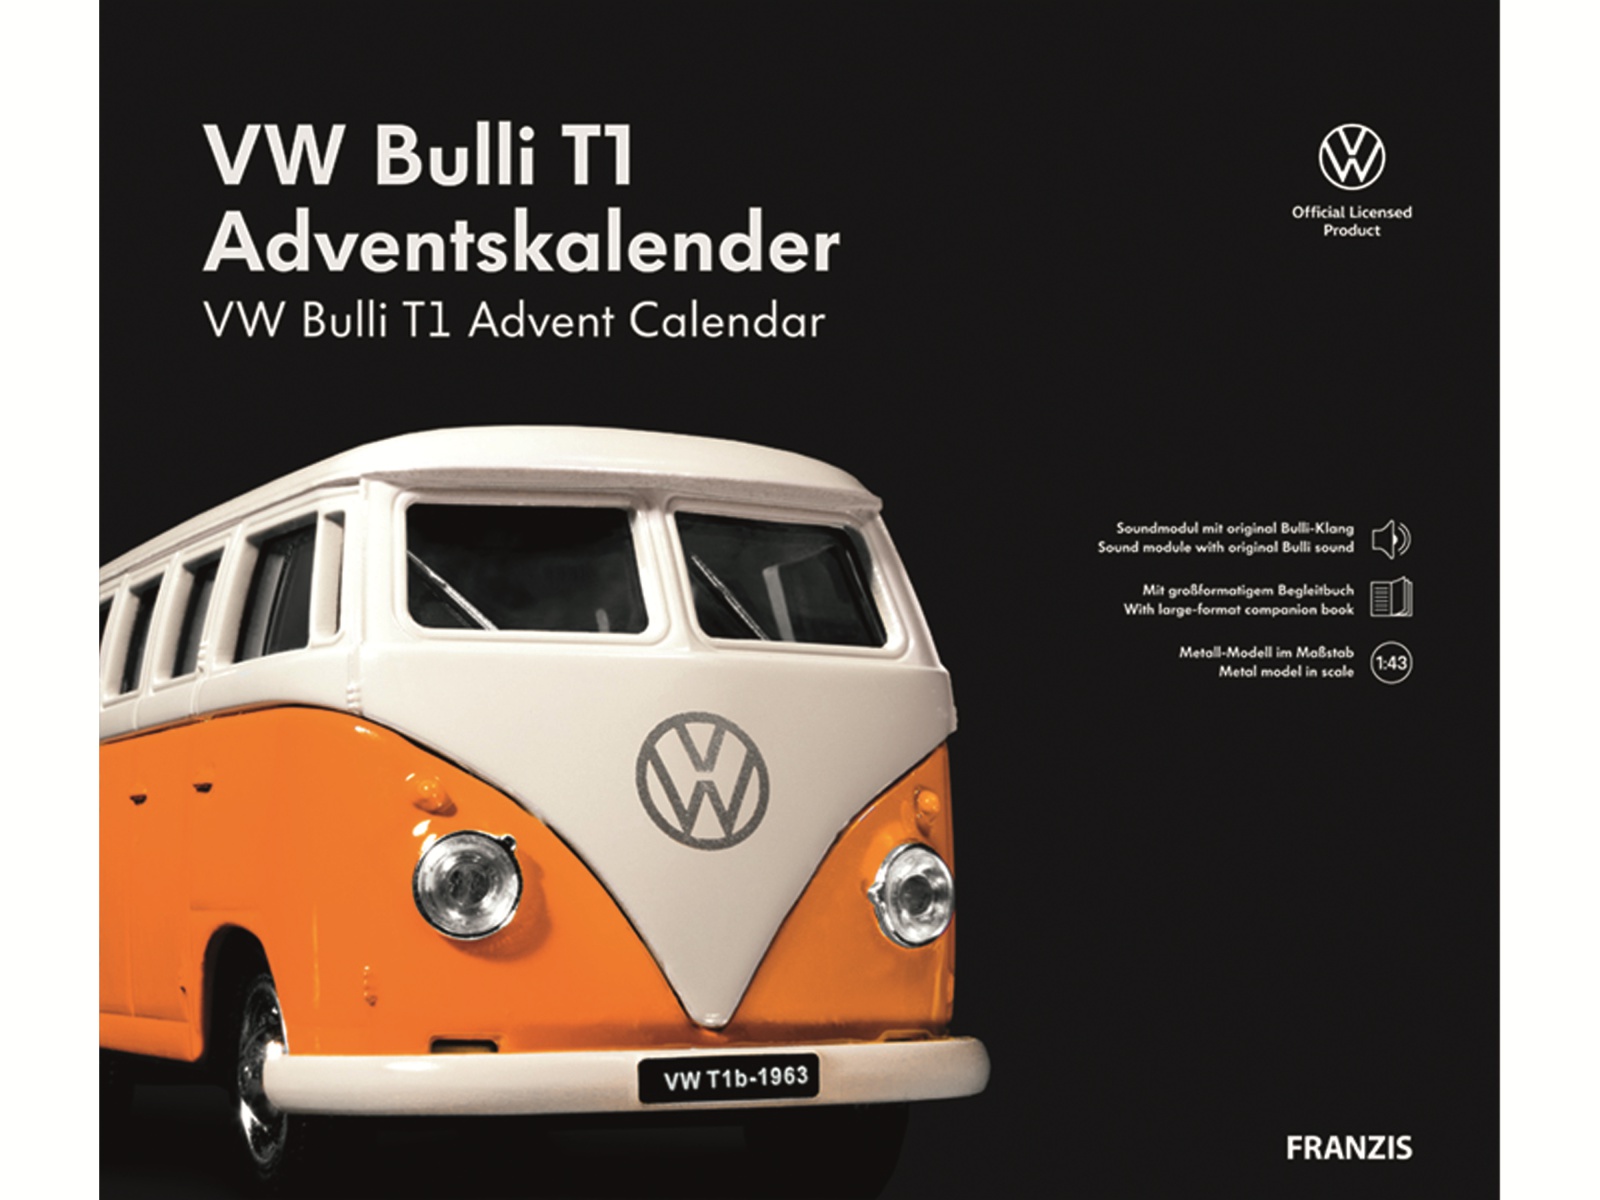 FRANZIS Adventskalender, 55134, VW Bulli T1 Adventskalender